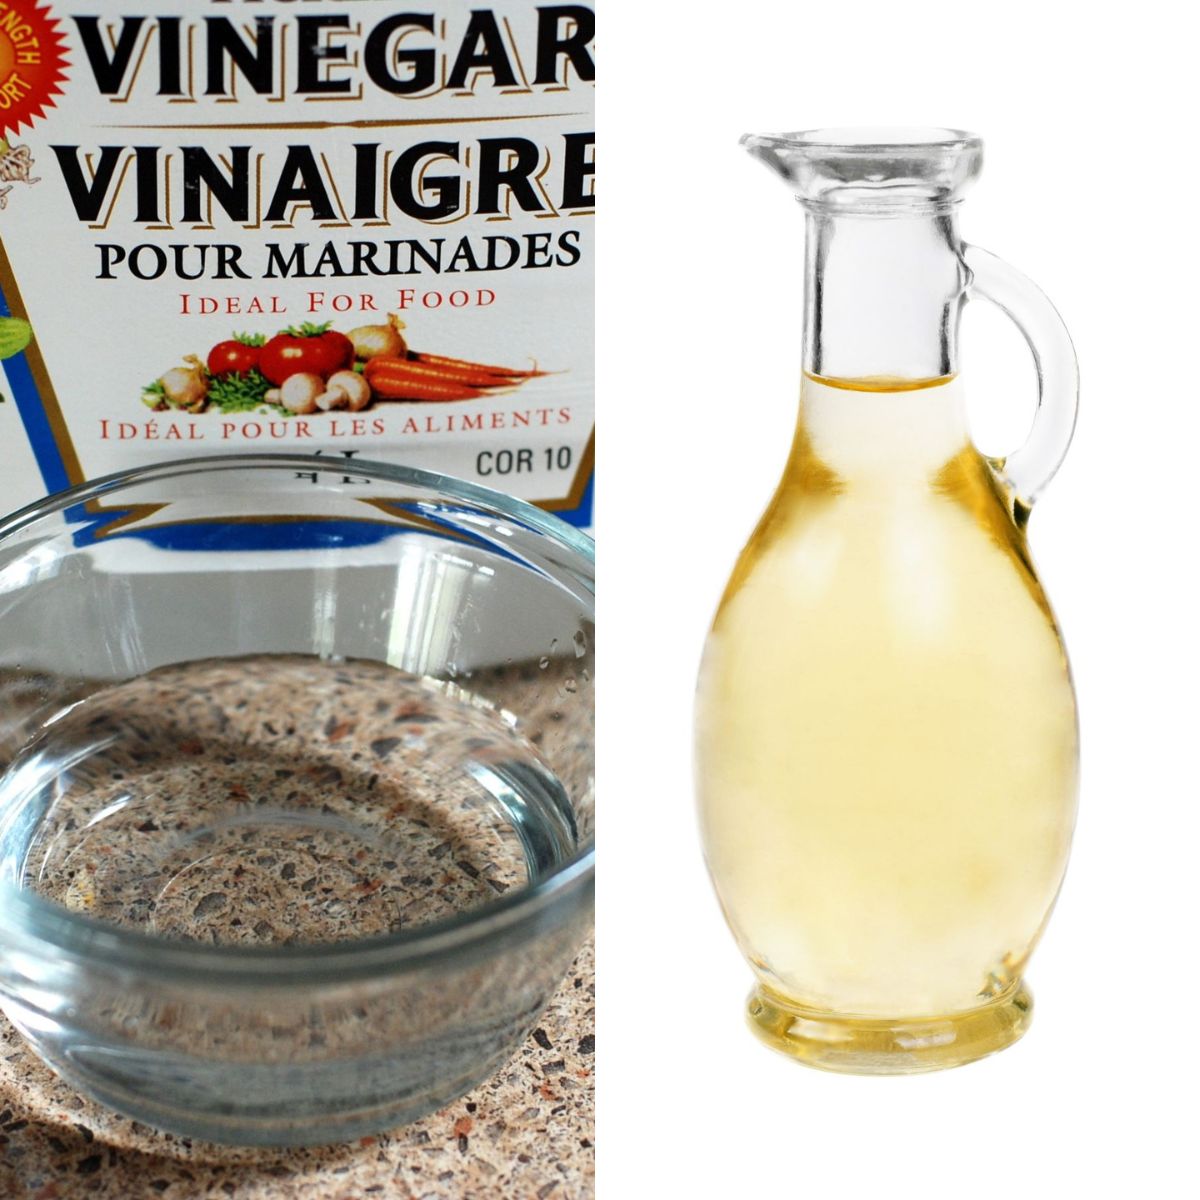 White Vinegar & White Wine Vinegar split image.